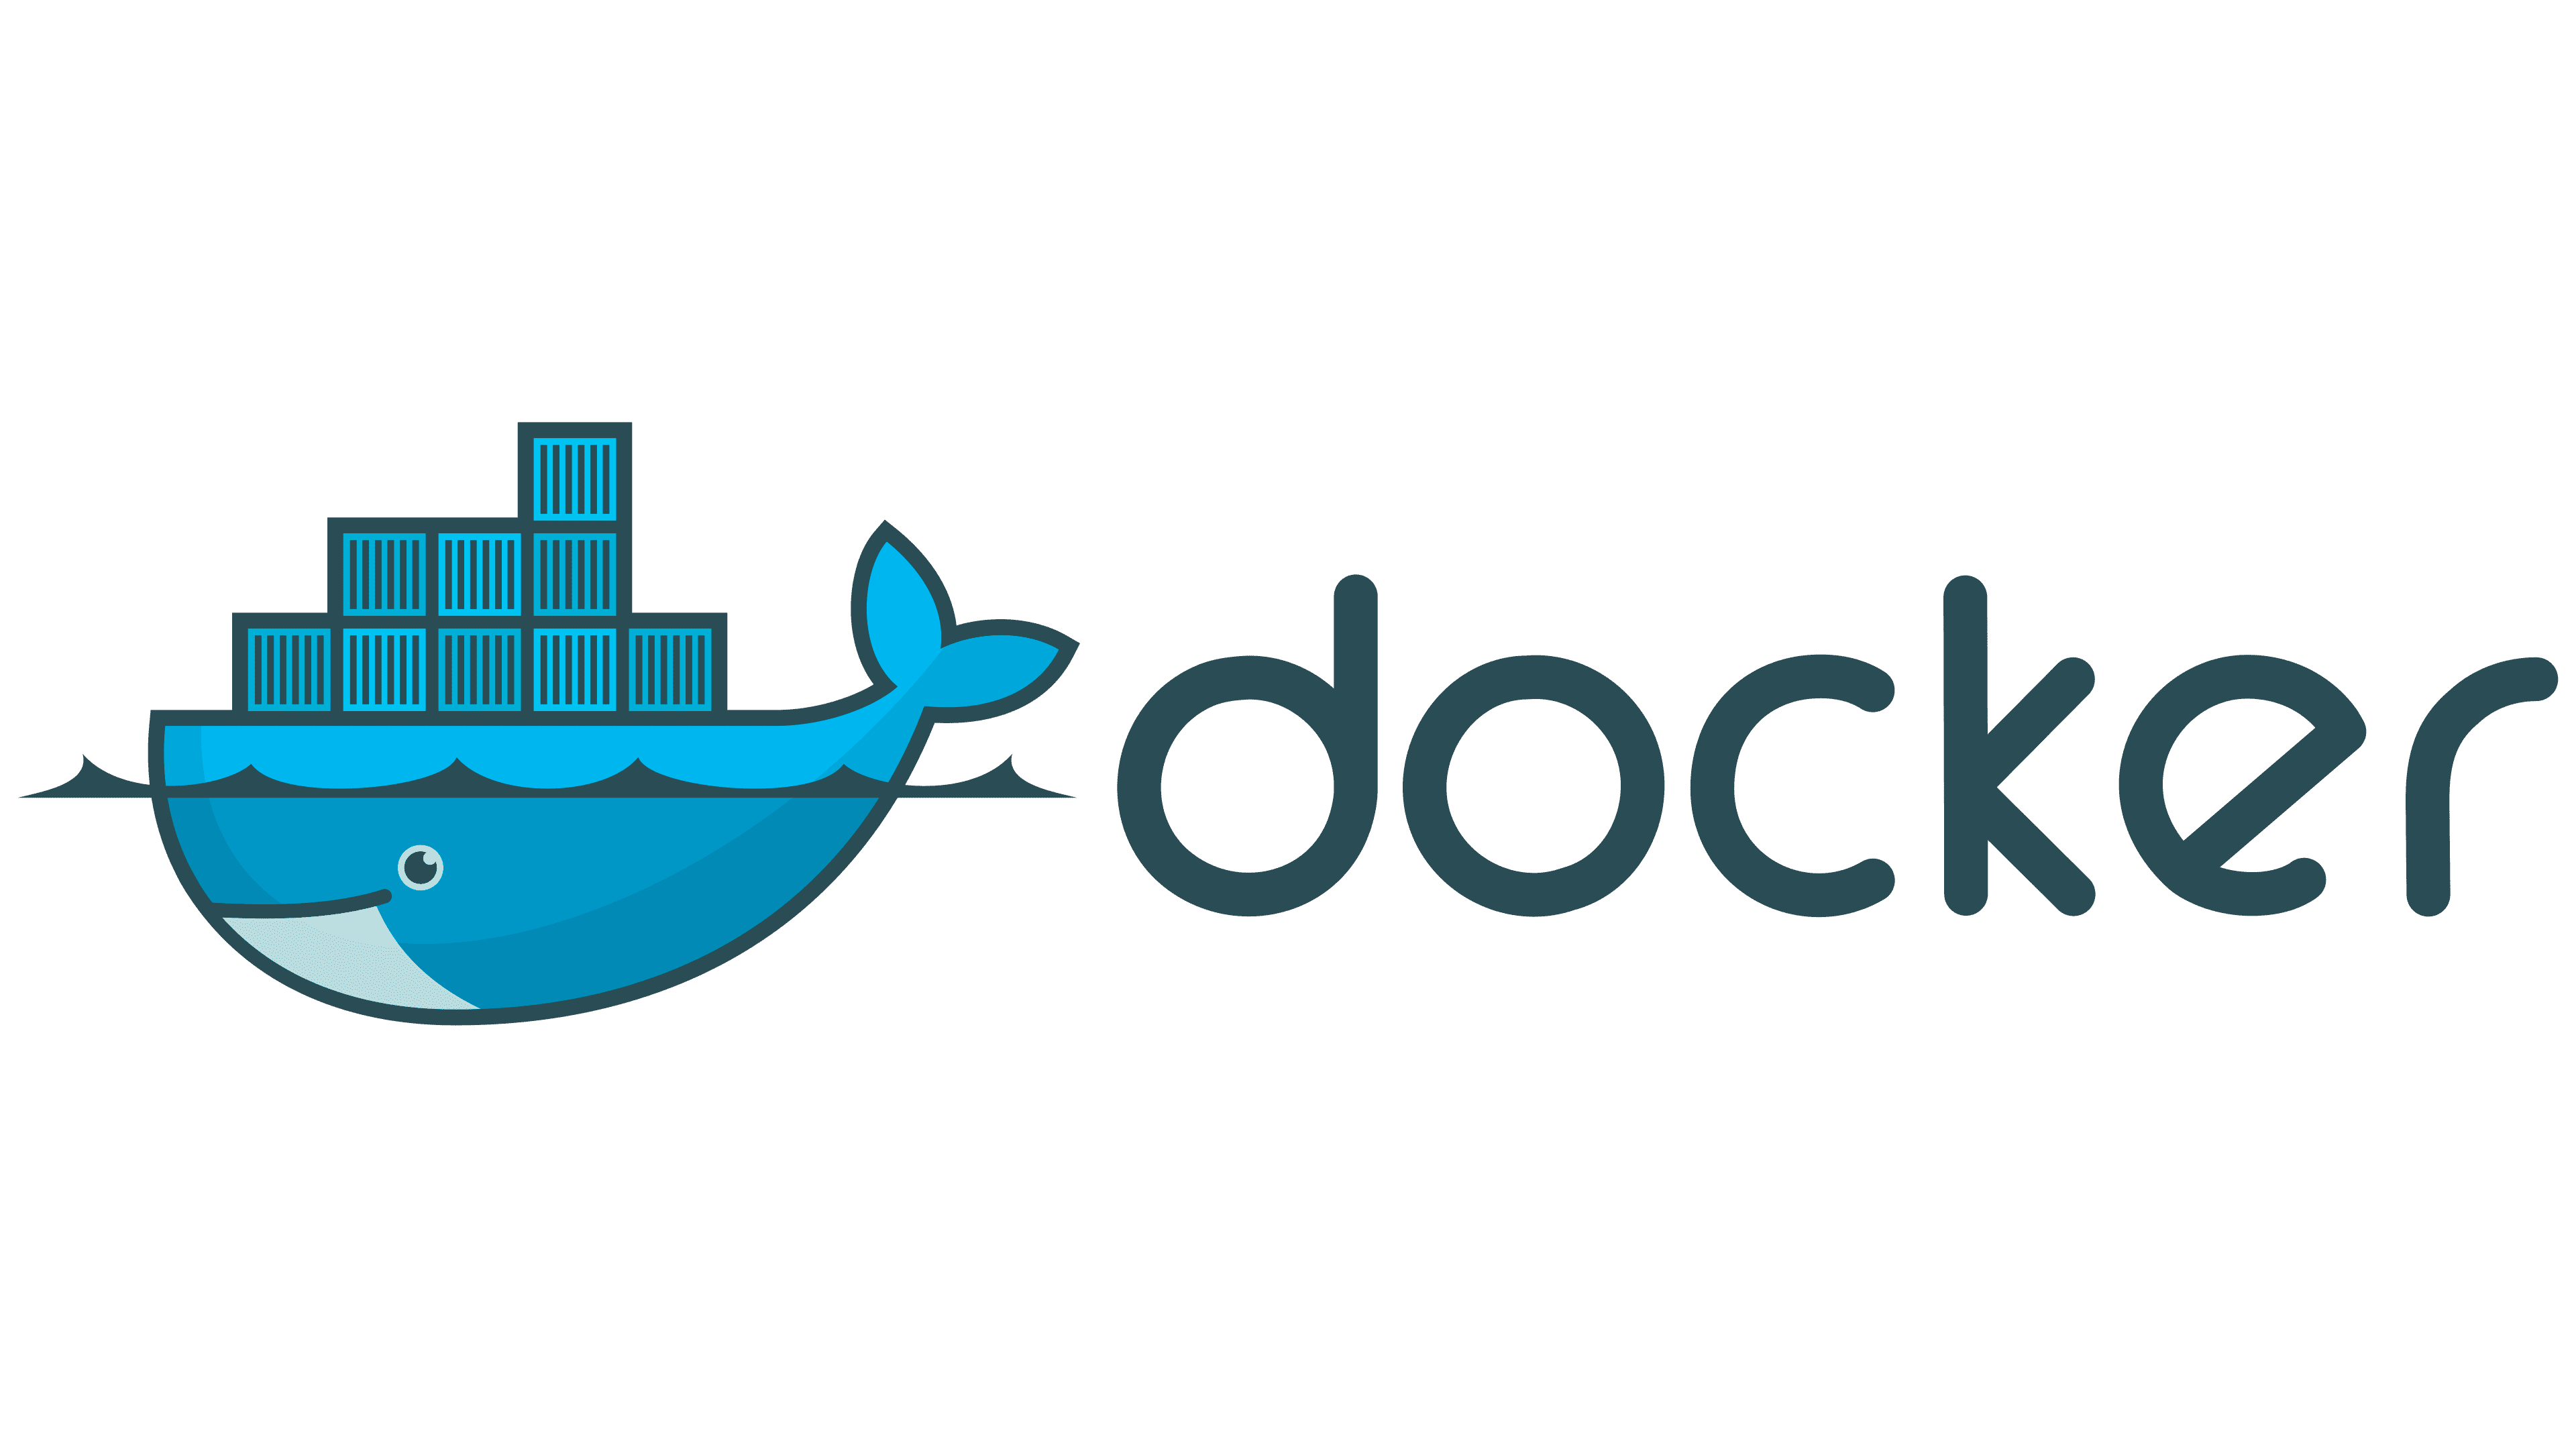 docker-logo-2015-2017vdfdf.png